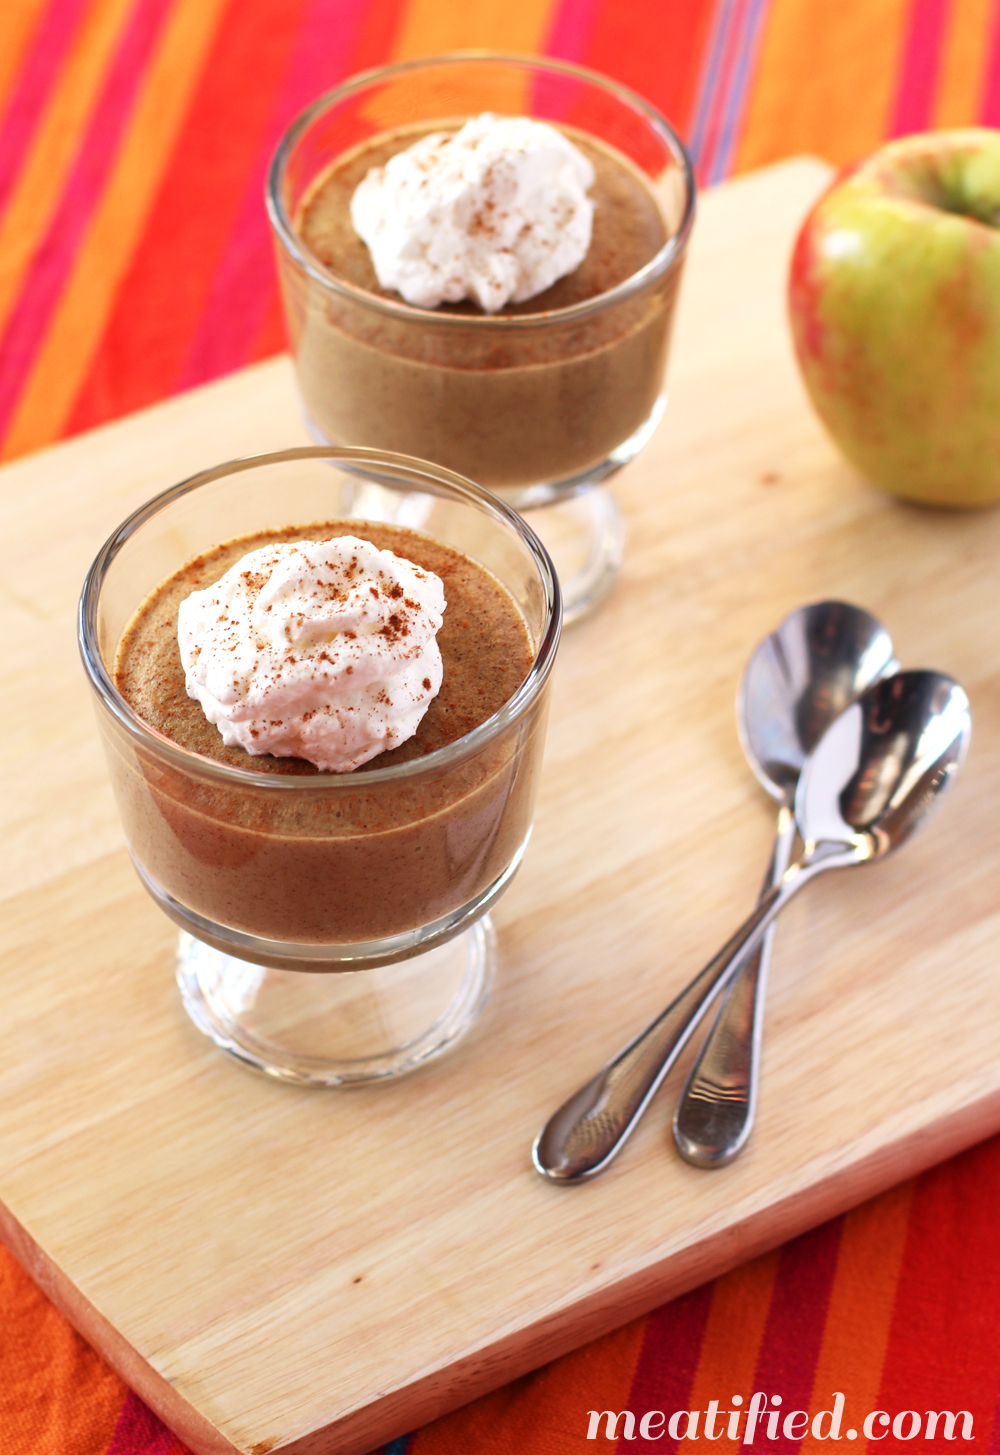 Apple Pie Pudding from http://meatified.com #paleo #dairyfree #glutenfree #pudding #pie #gelatin